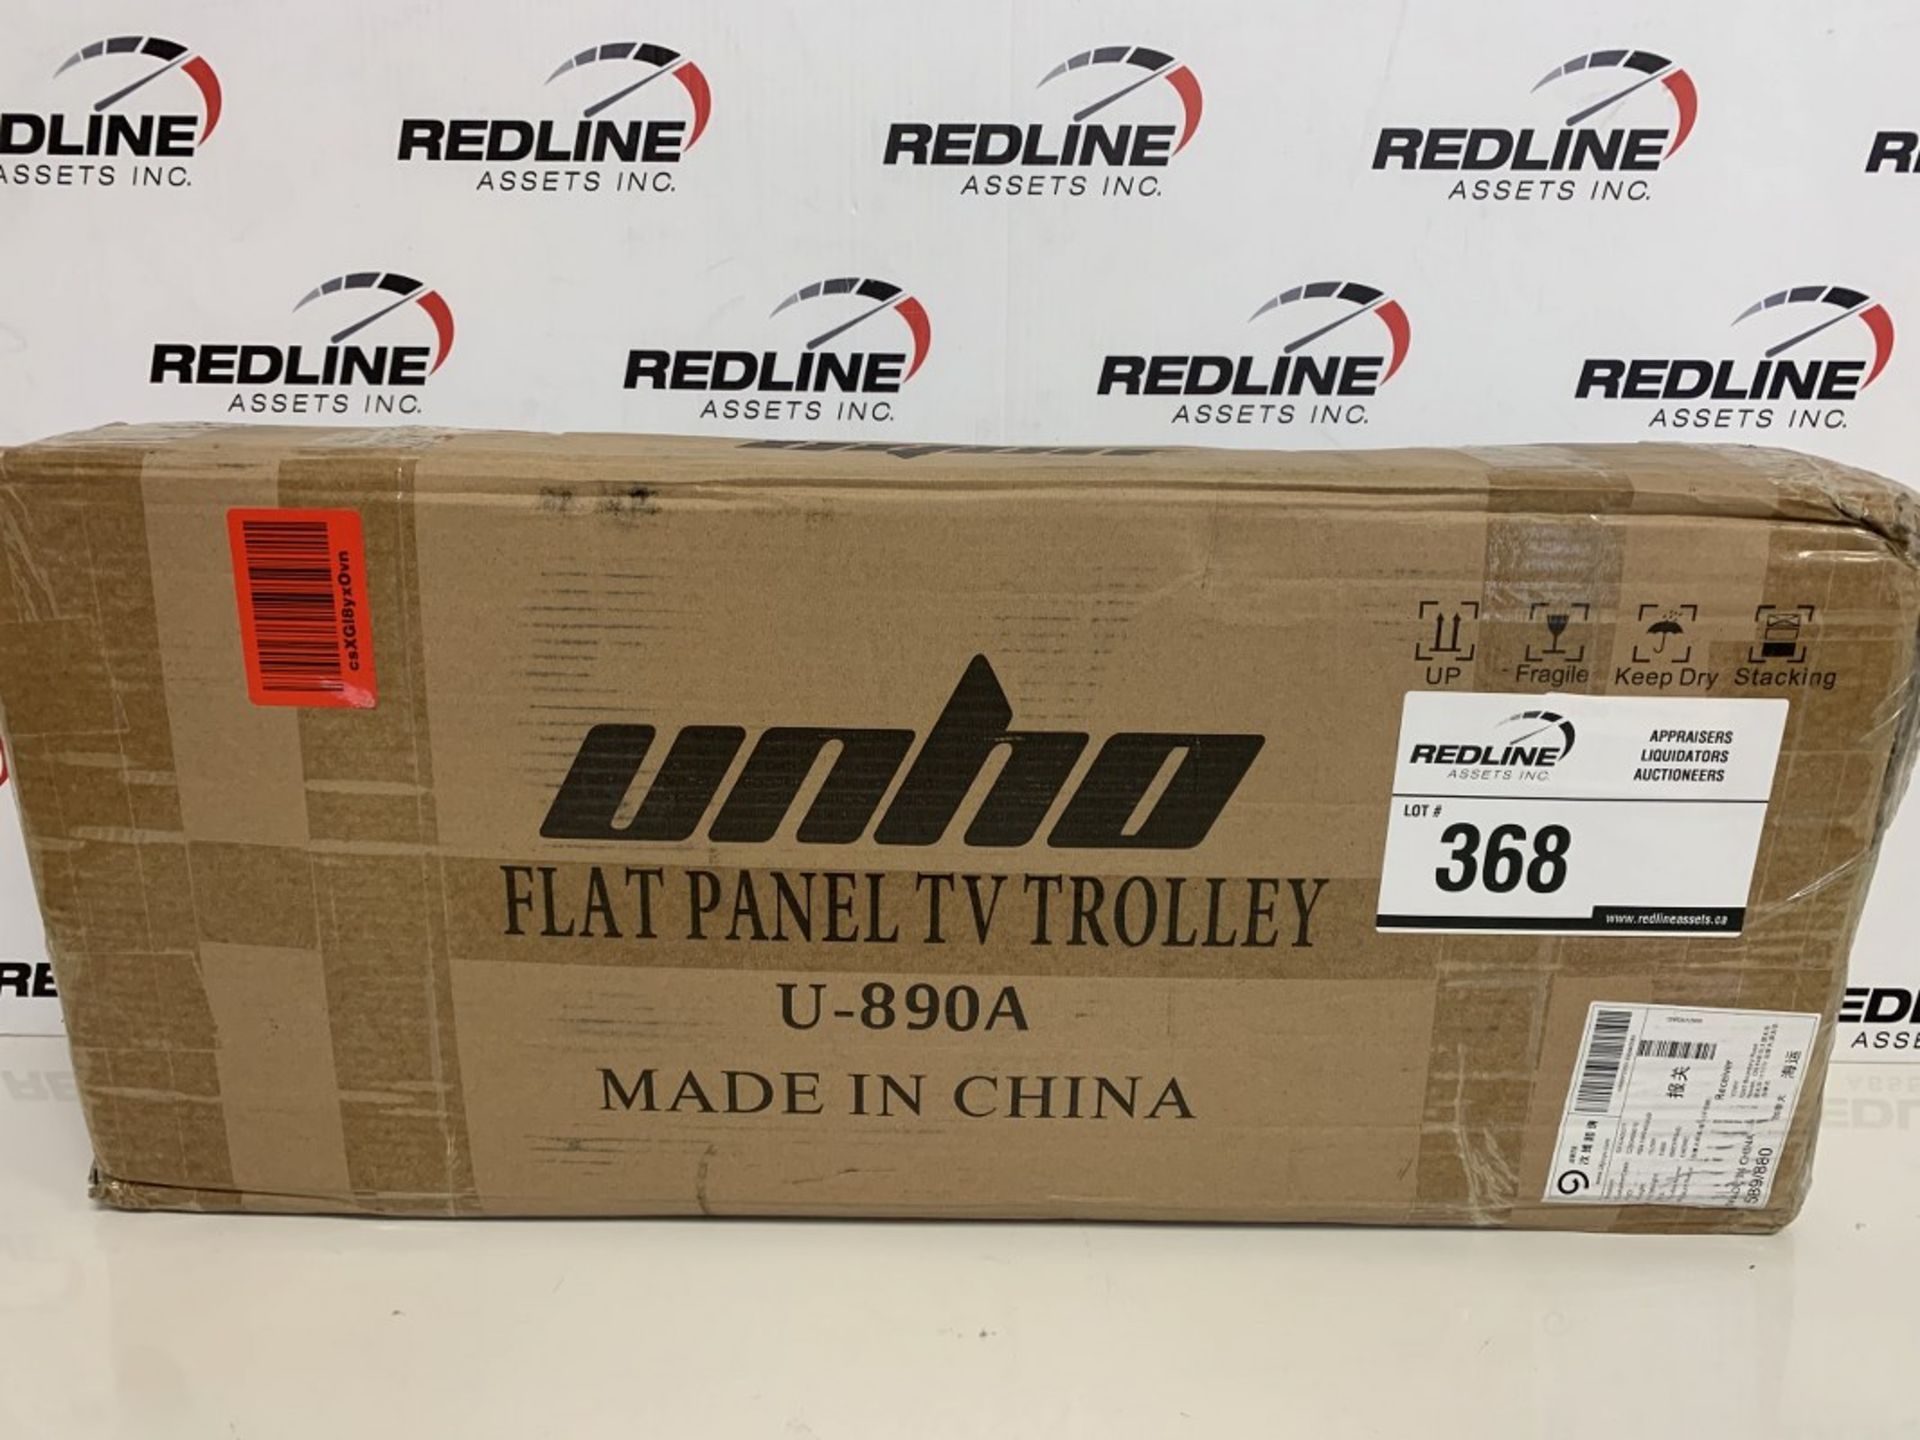 Unho - Flat Panel Tv Trolley